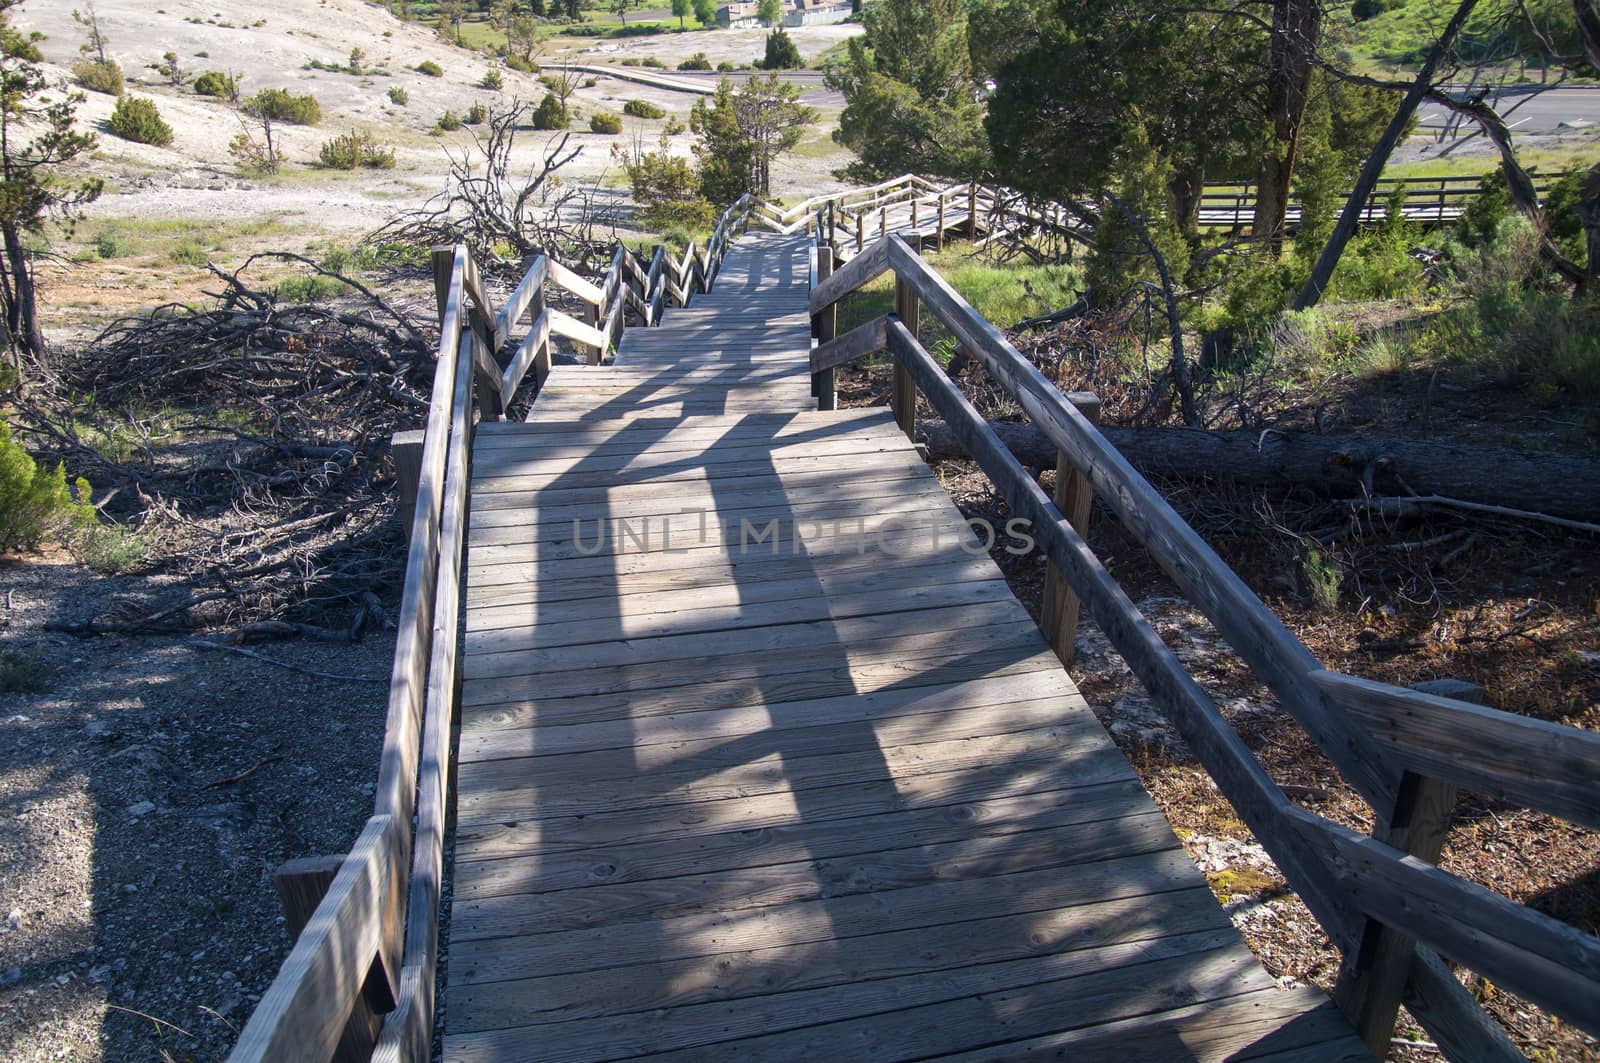 Steep boardwalks of Mammoth Hot Springs by emattil